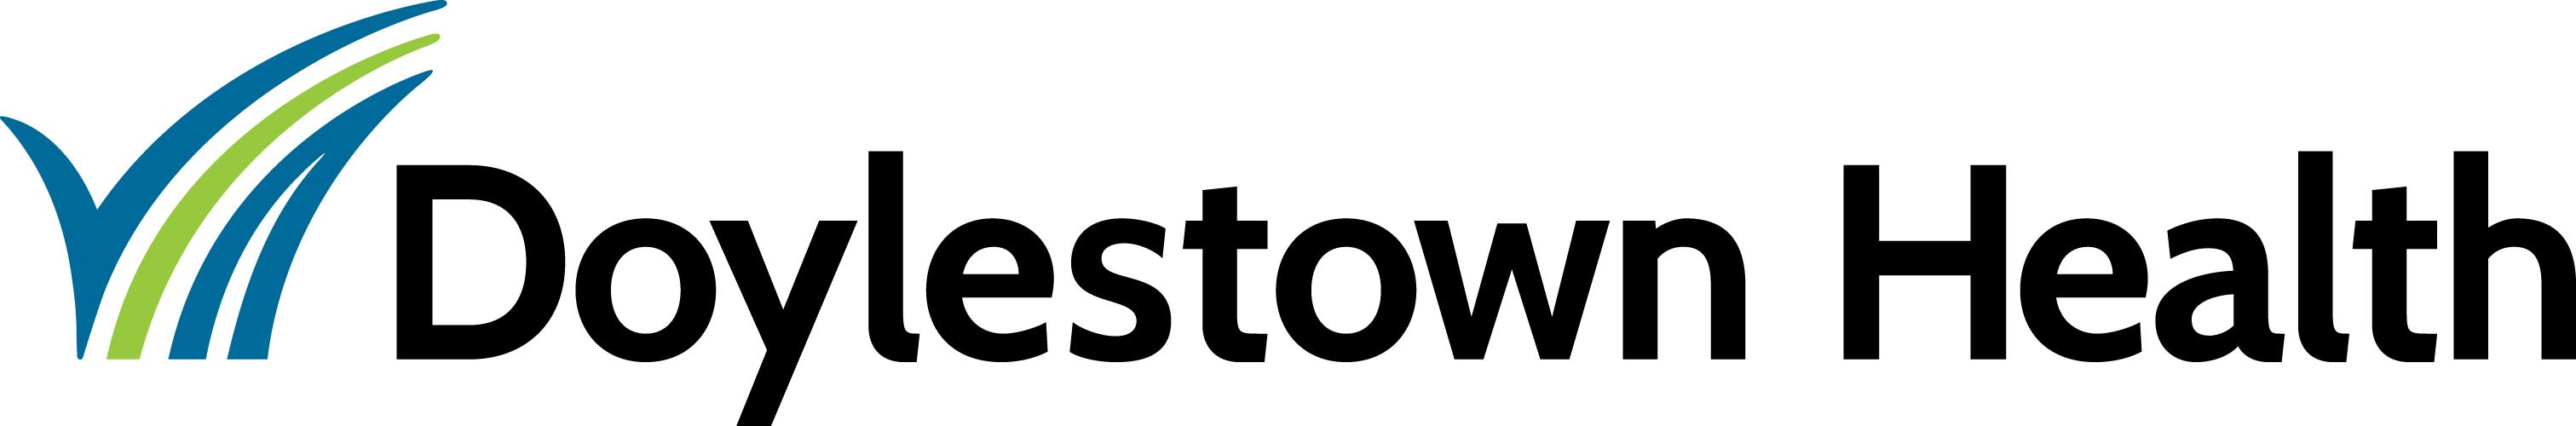 Doylestown Logo - Home - CB Cares Educational Foundation